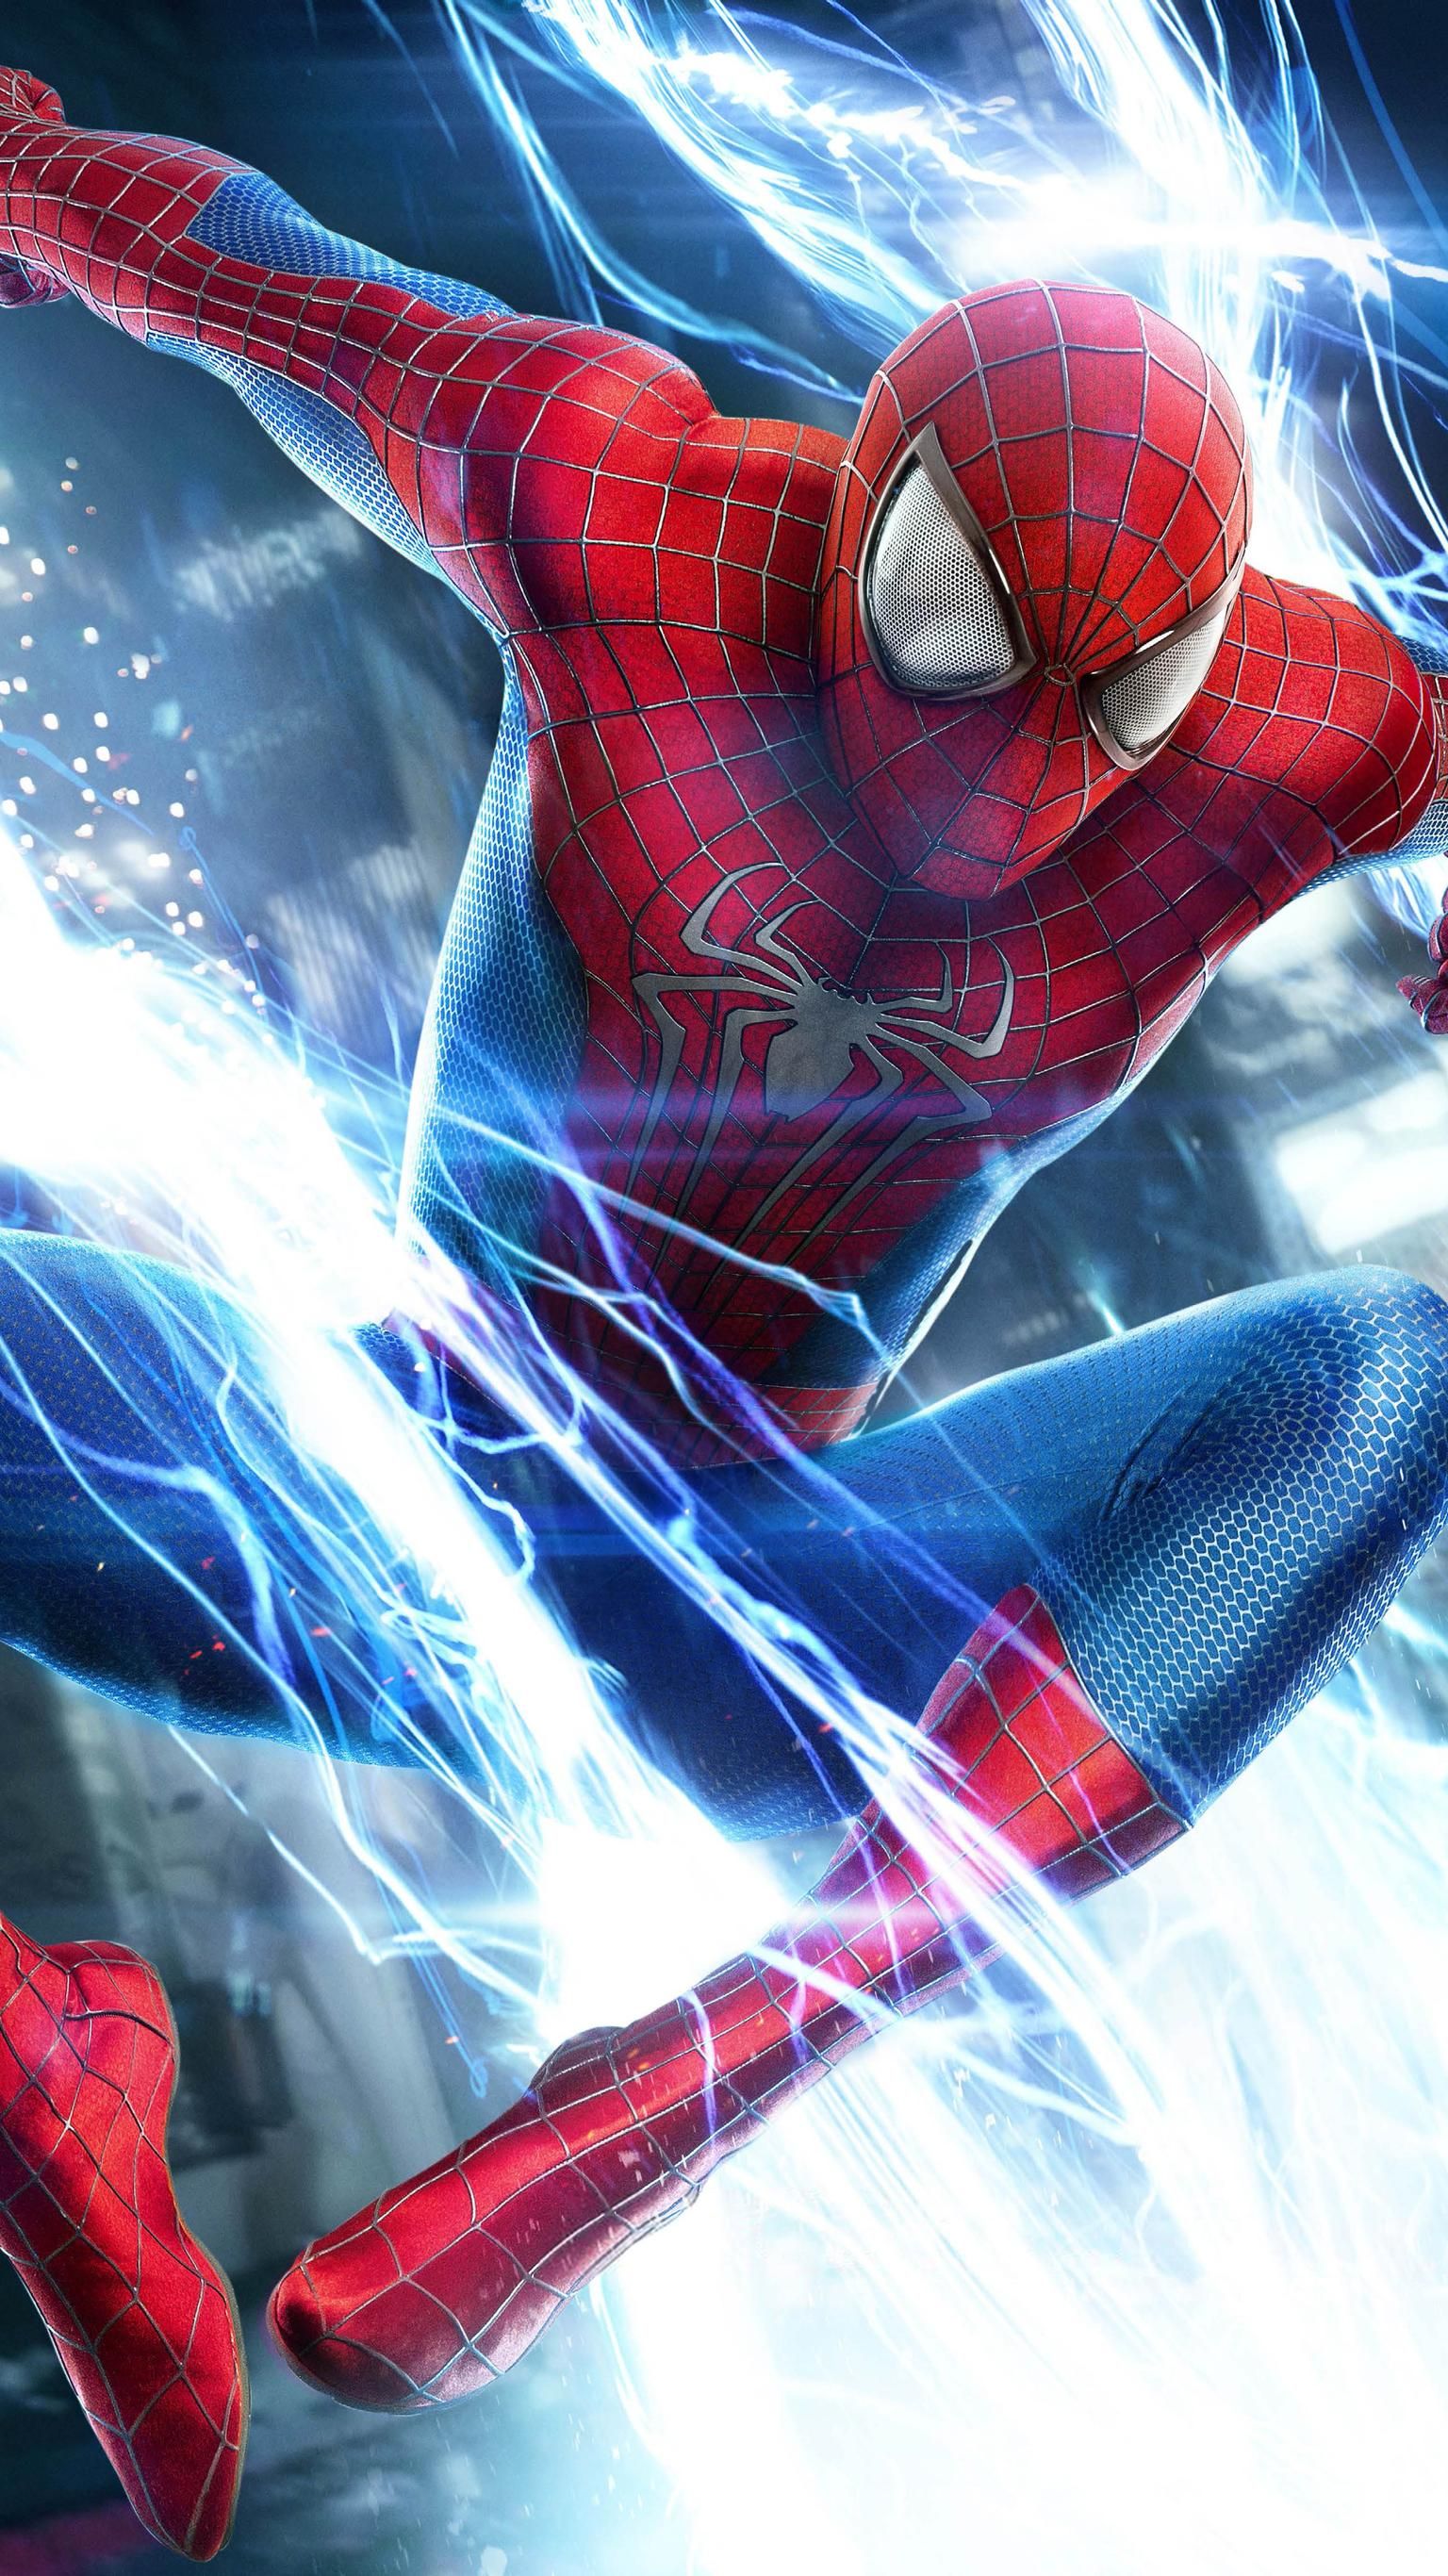 The Amazing Spider Man 2 (2014) Phone Wallpaper. Moviemania. Spiderman Artwork, Marvel Spiderman Art, Amazing Spiderman Movie